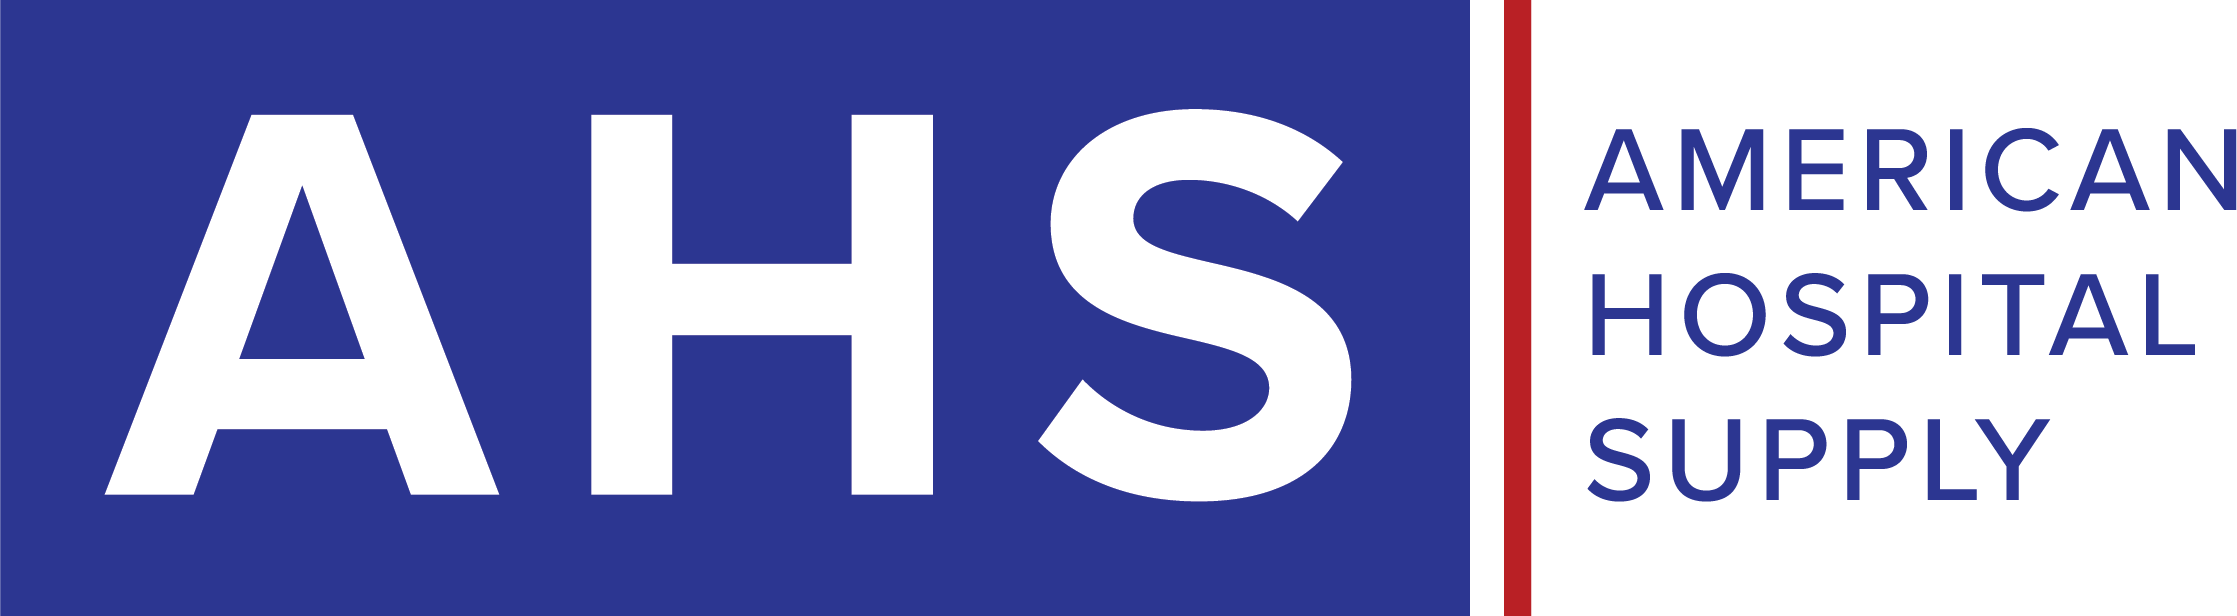 American Hospital Supply Logo